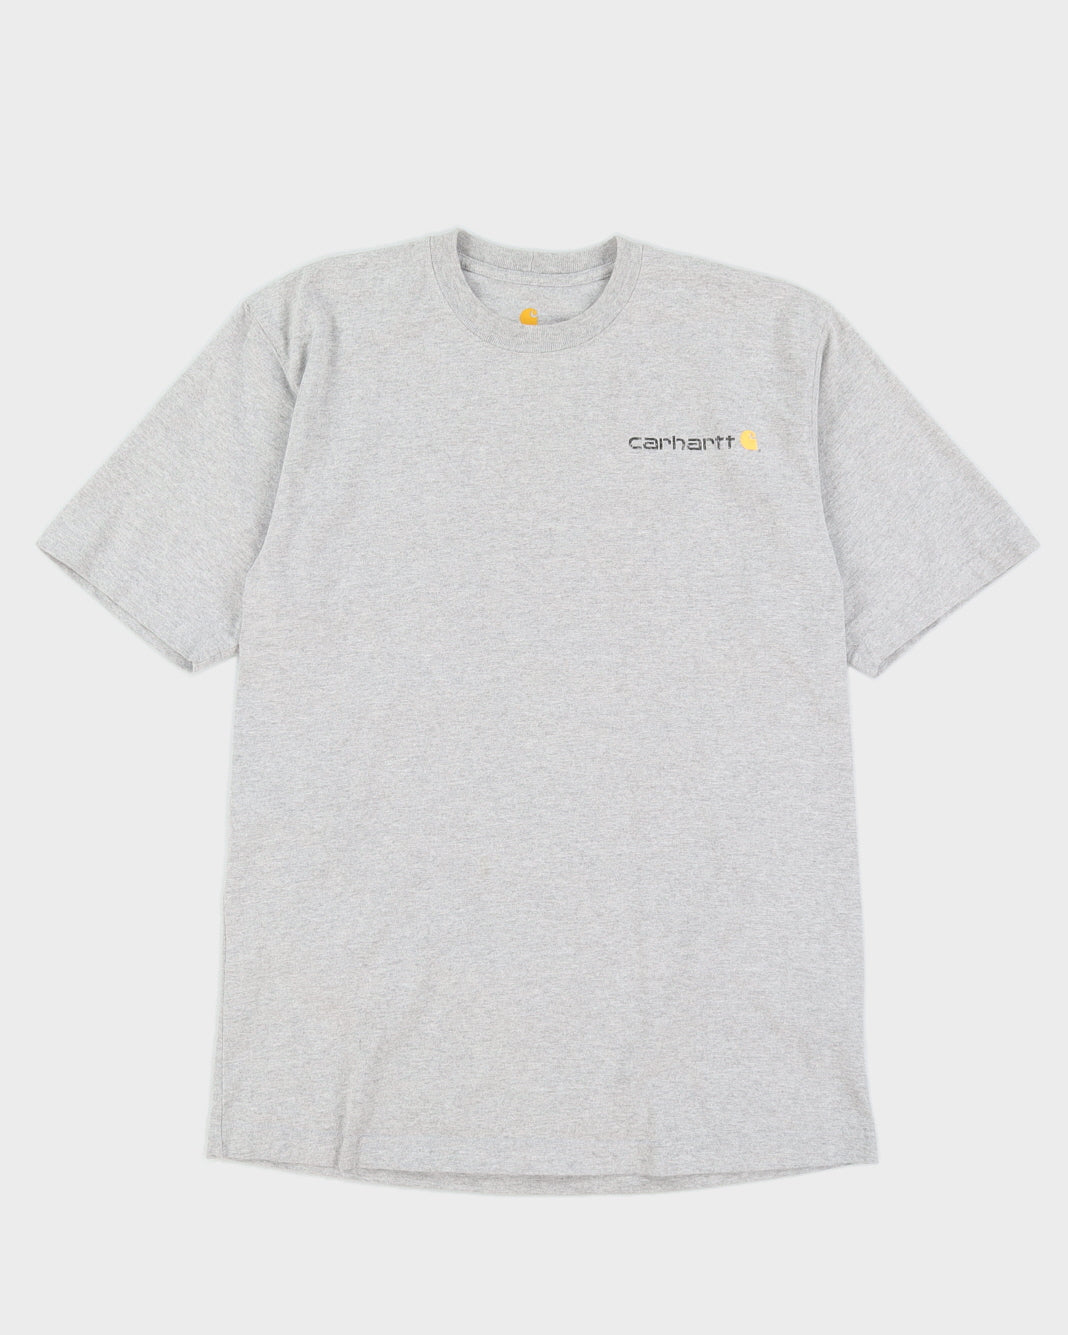 Carhartt Grey Marle T Shirt - M